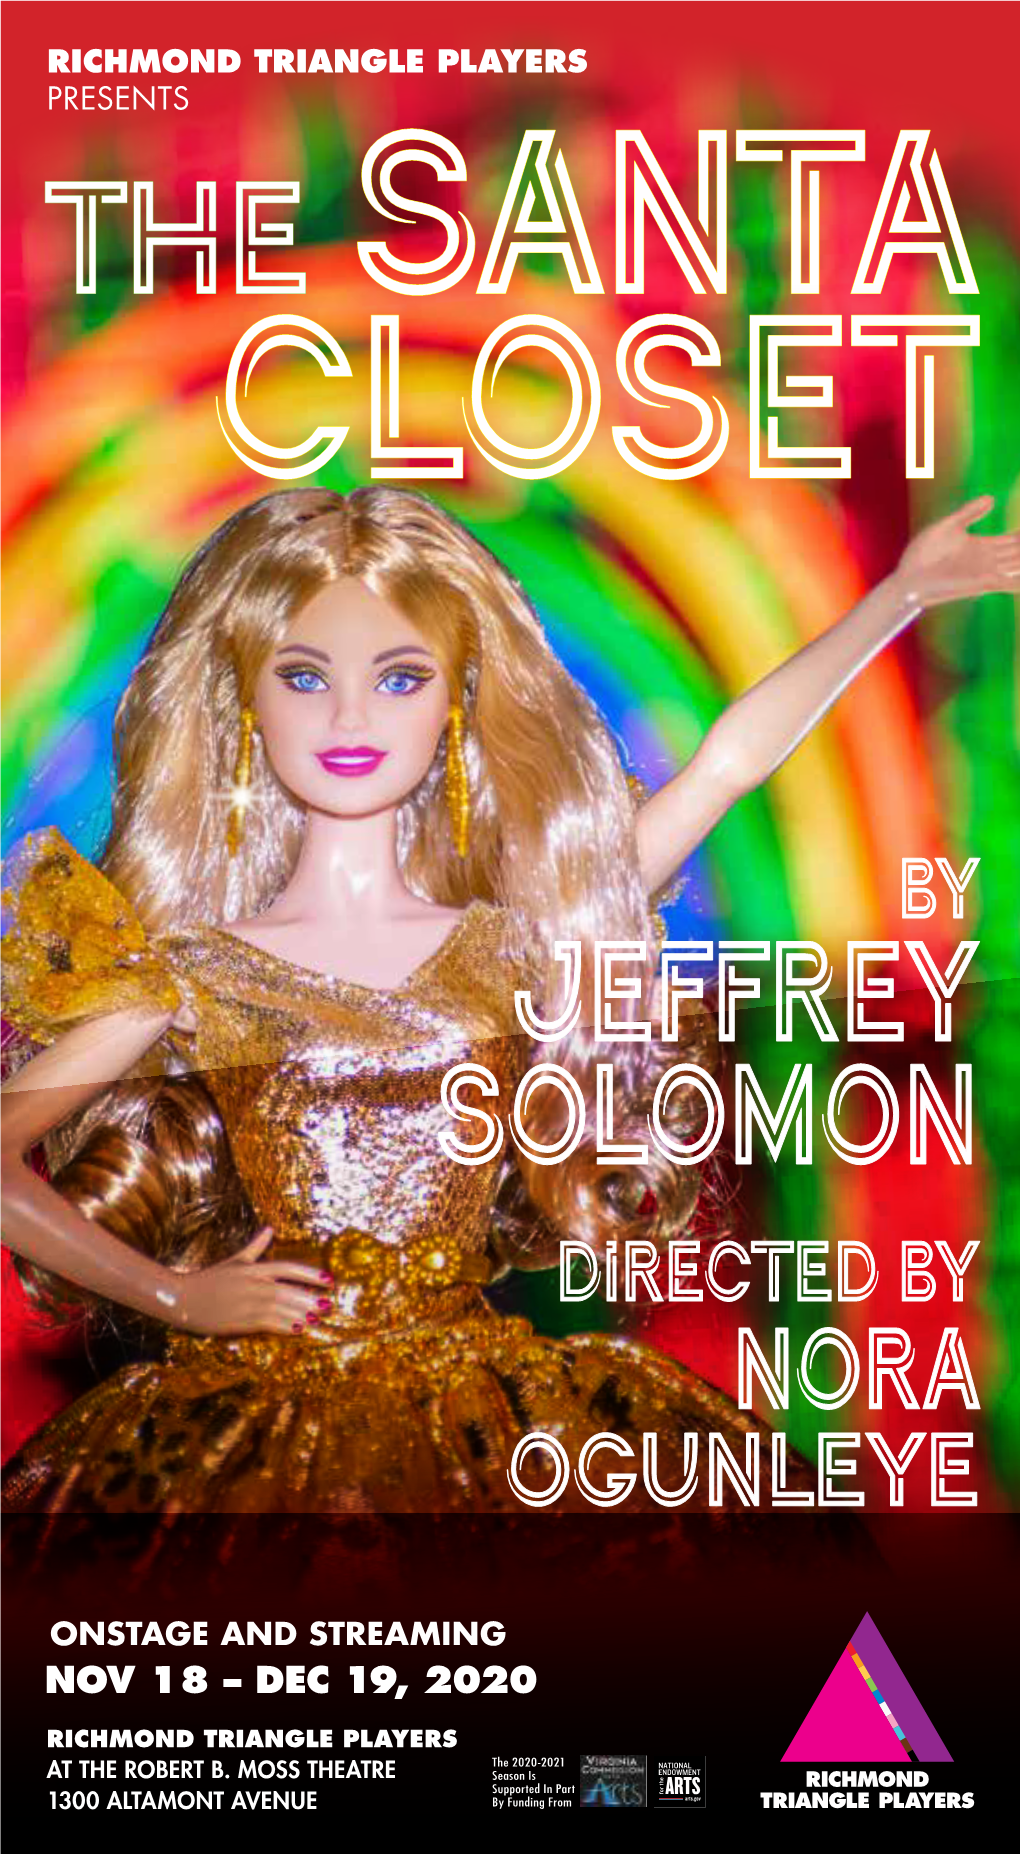 Jeffrey Solomon Directed by Nora Ogunleye